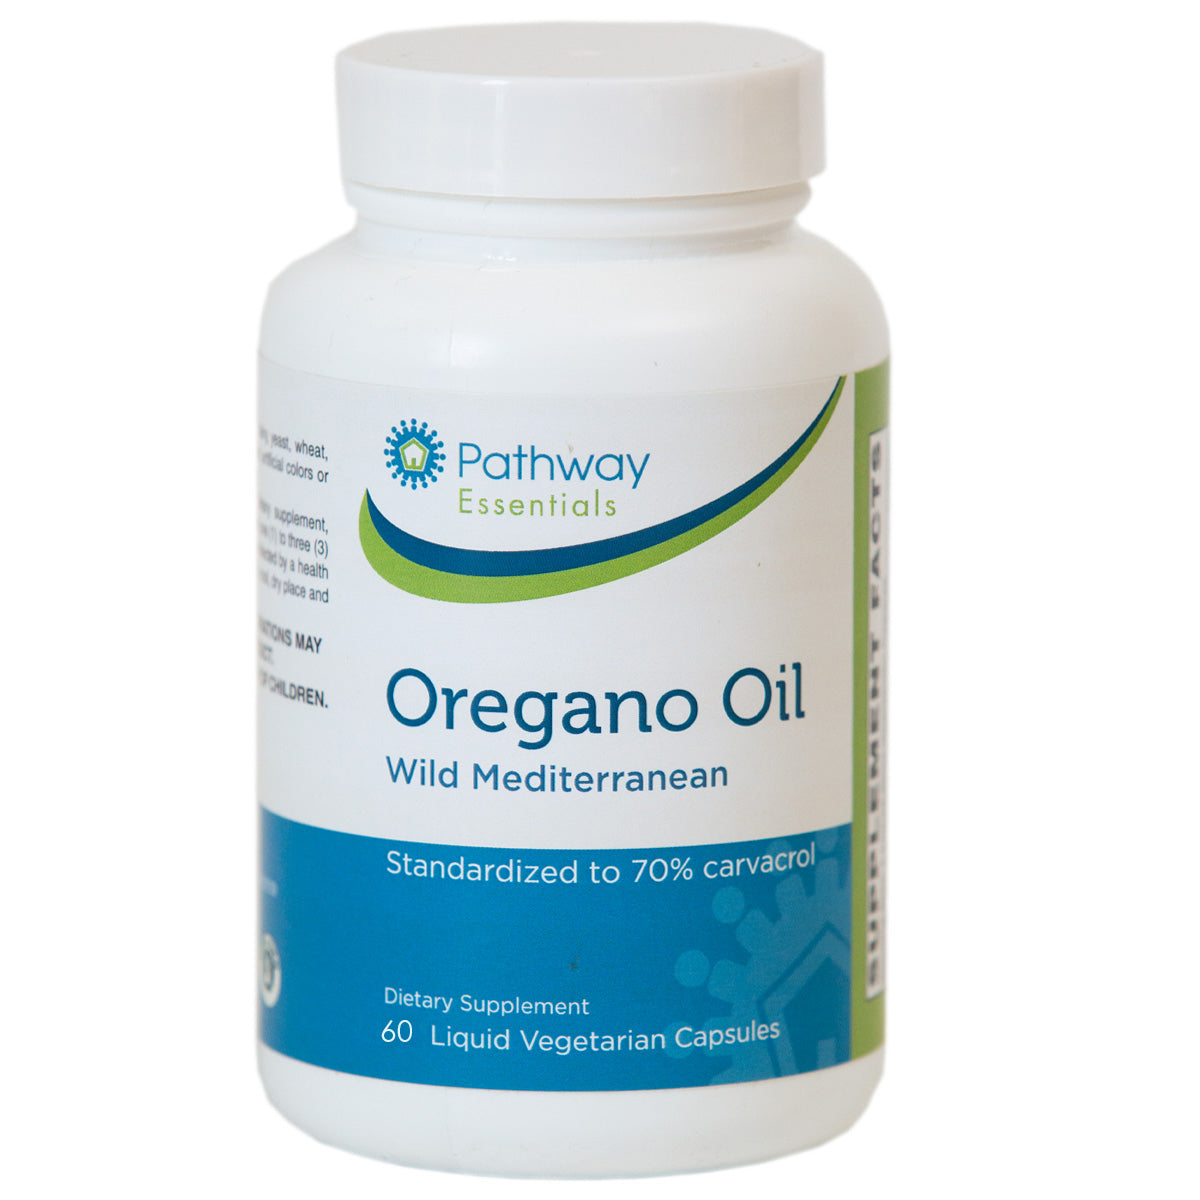 Oregano Oil 45 mg - My Village Green